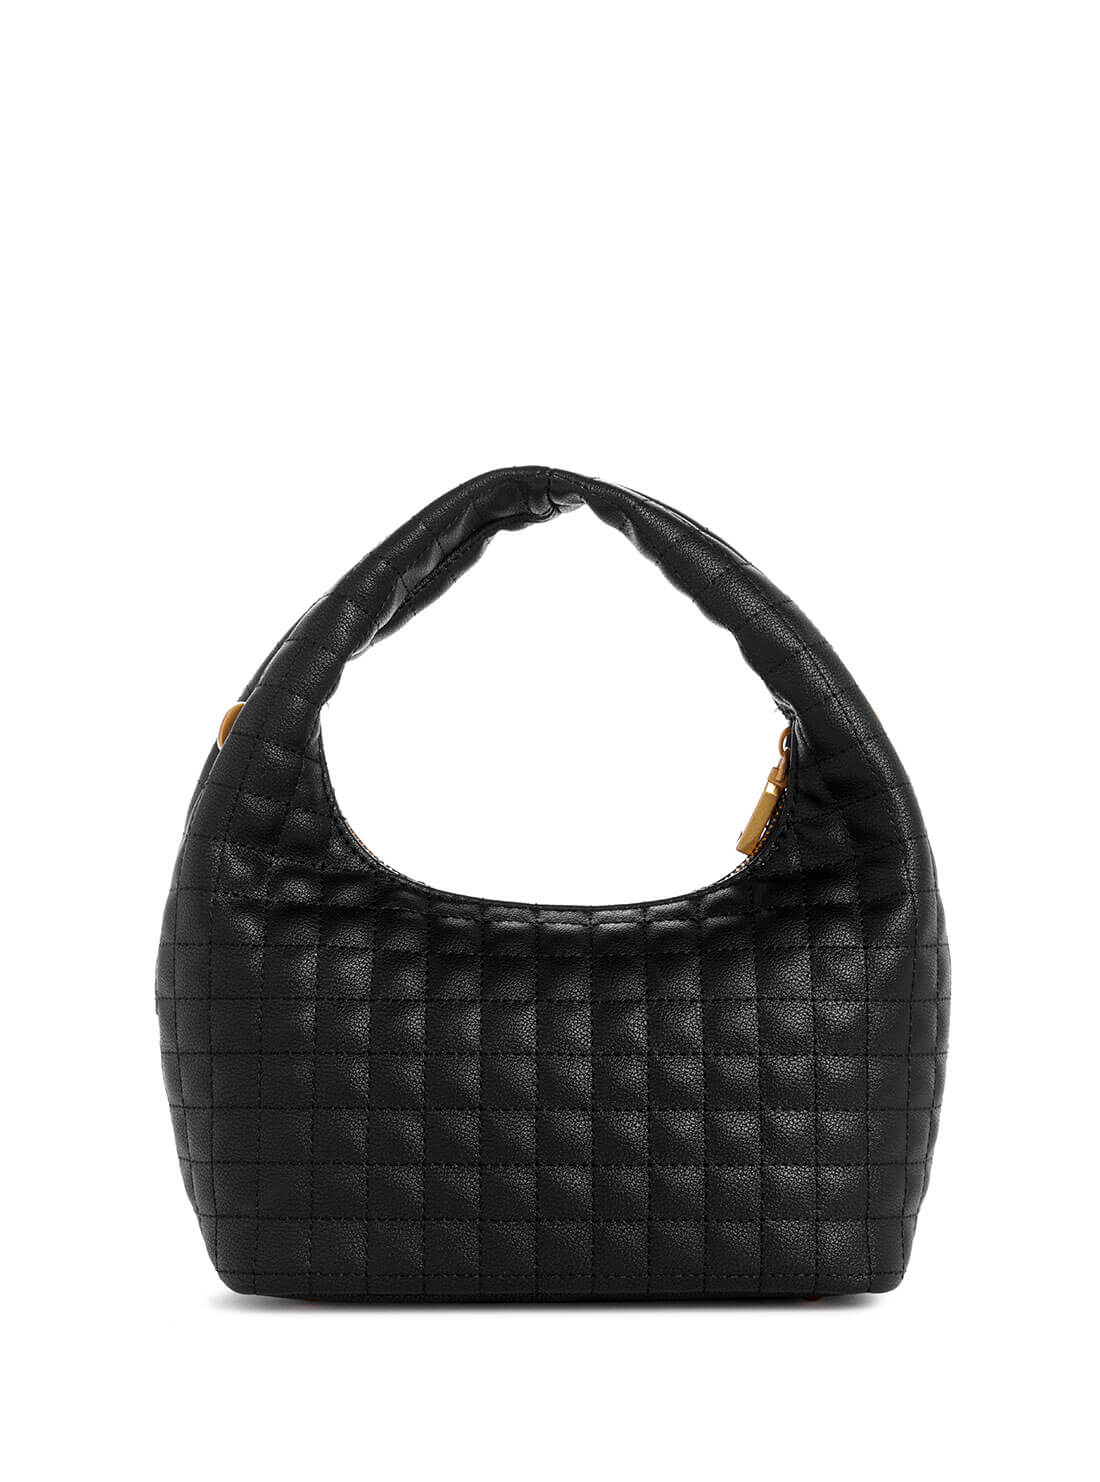 Women's Black Tia Shoulder Bag back view